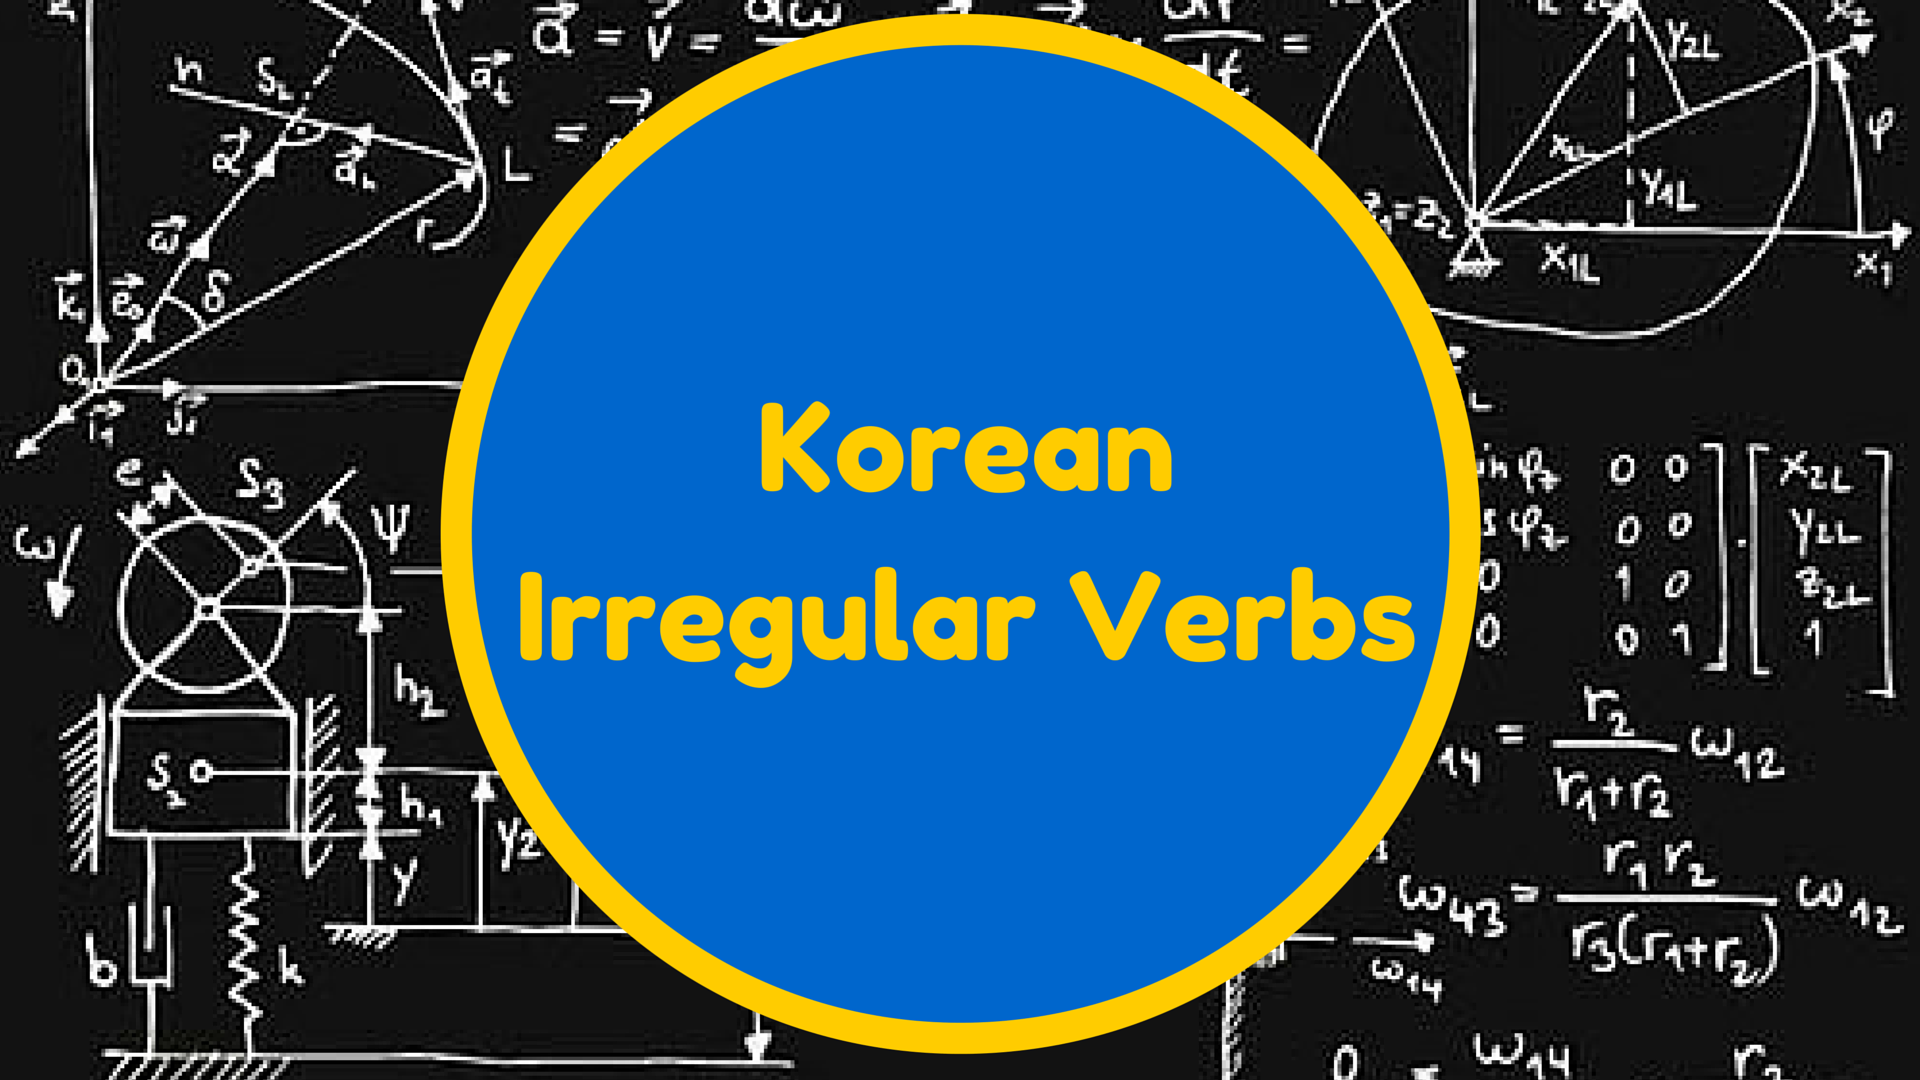 Korean Irregular Verbs